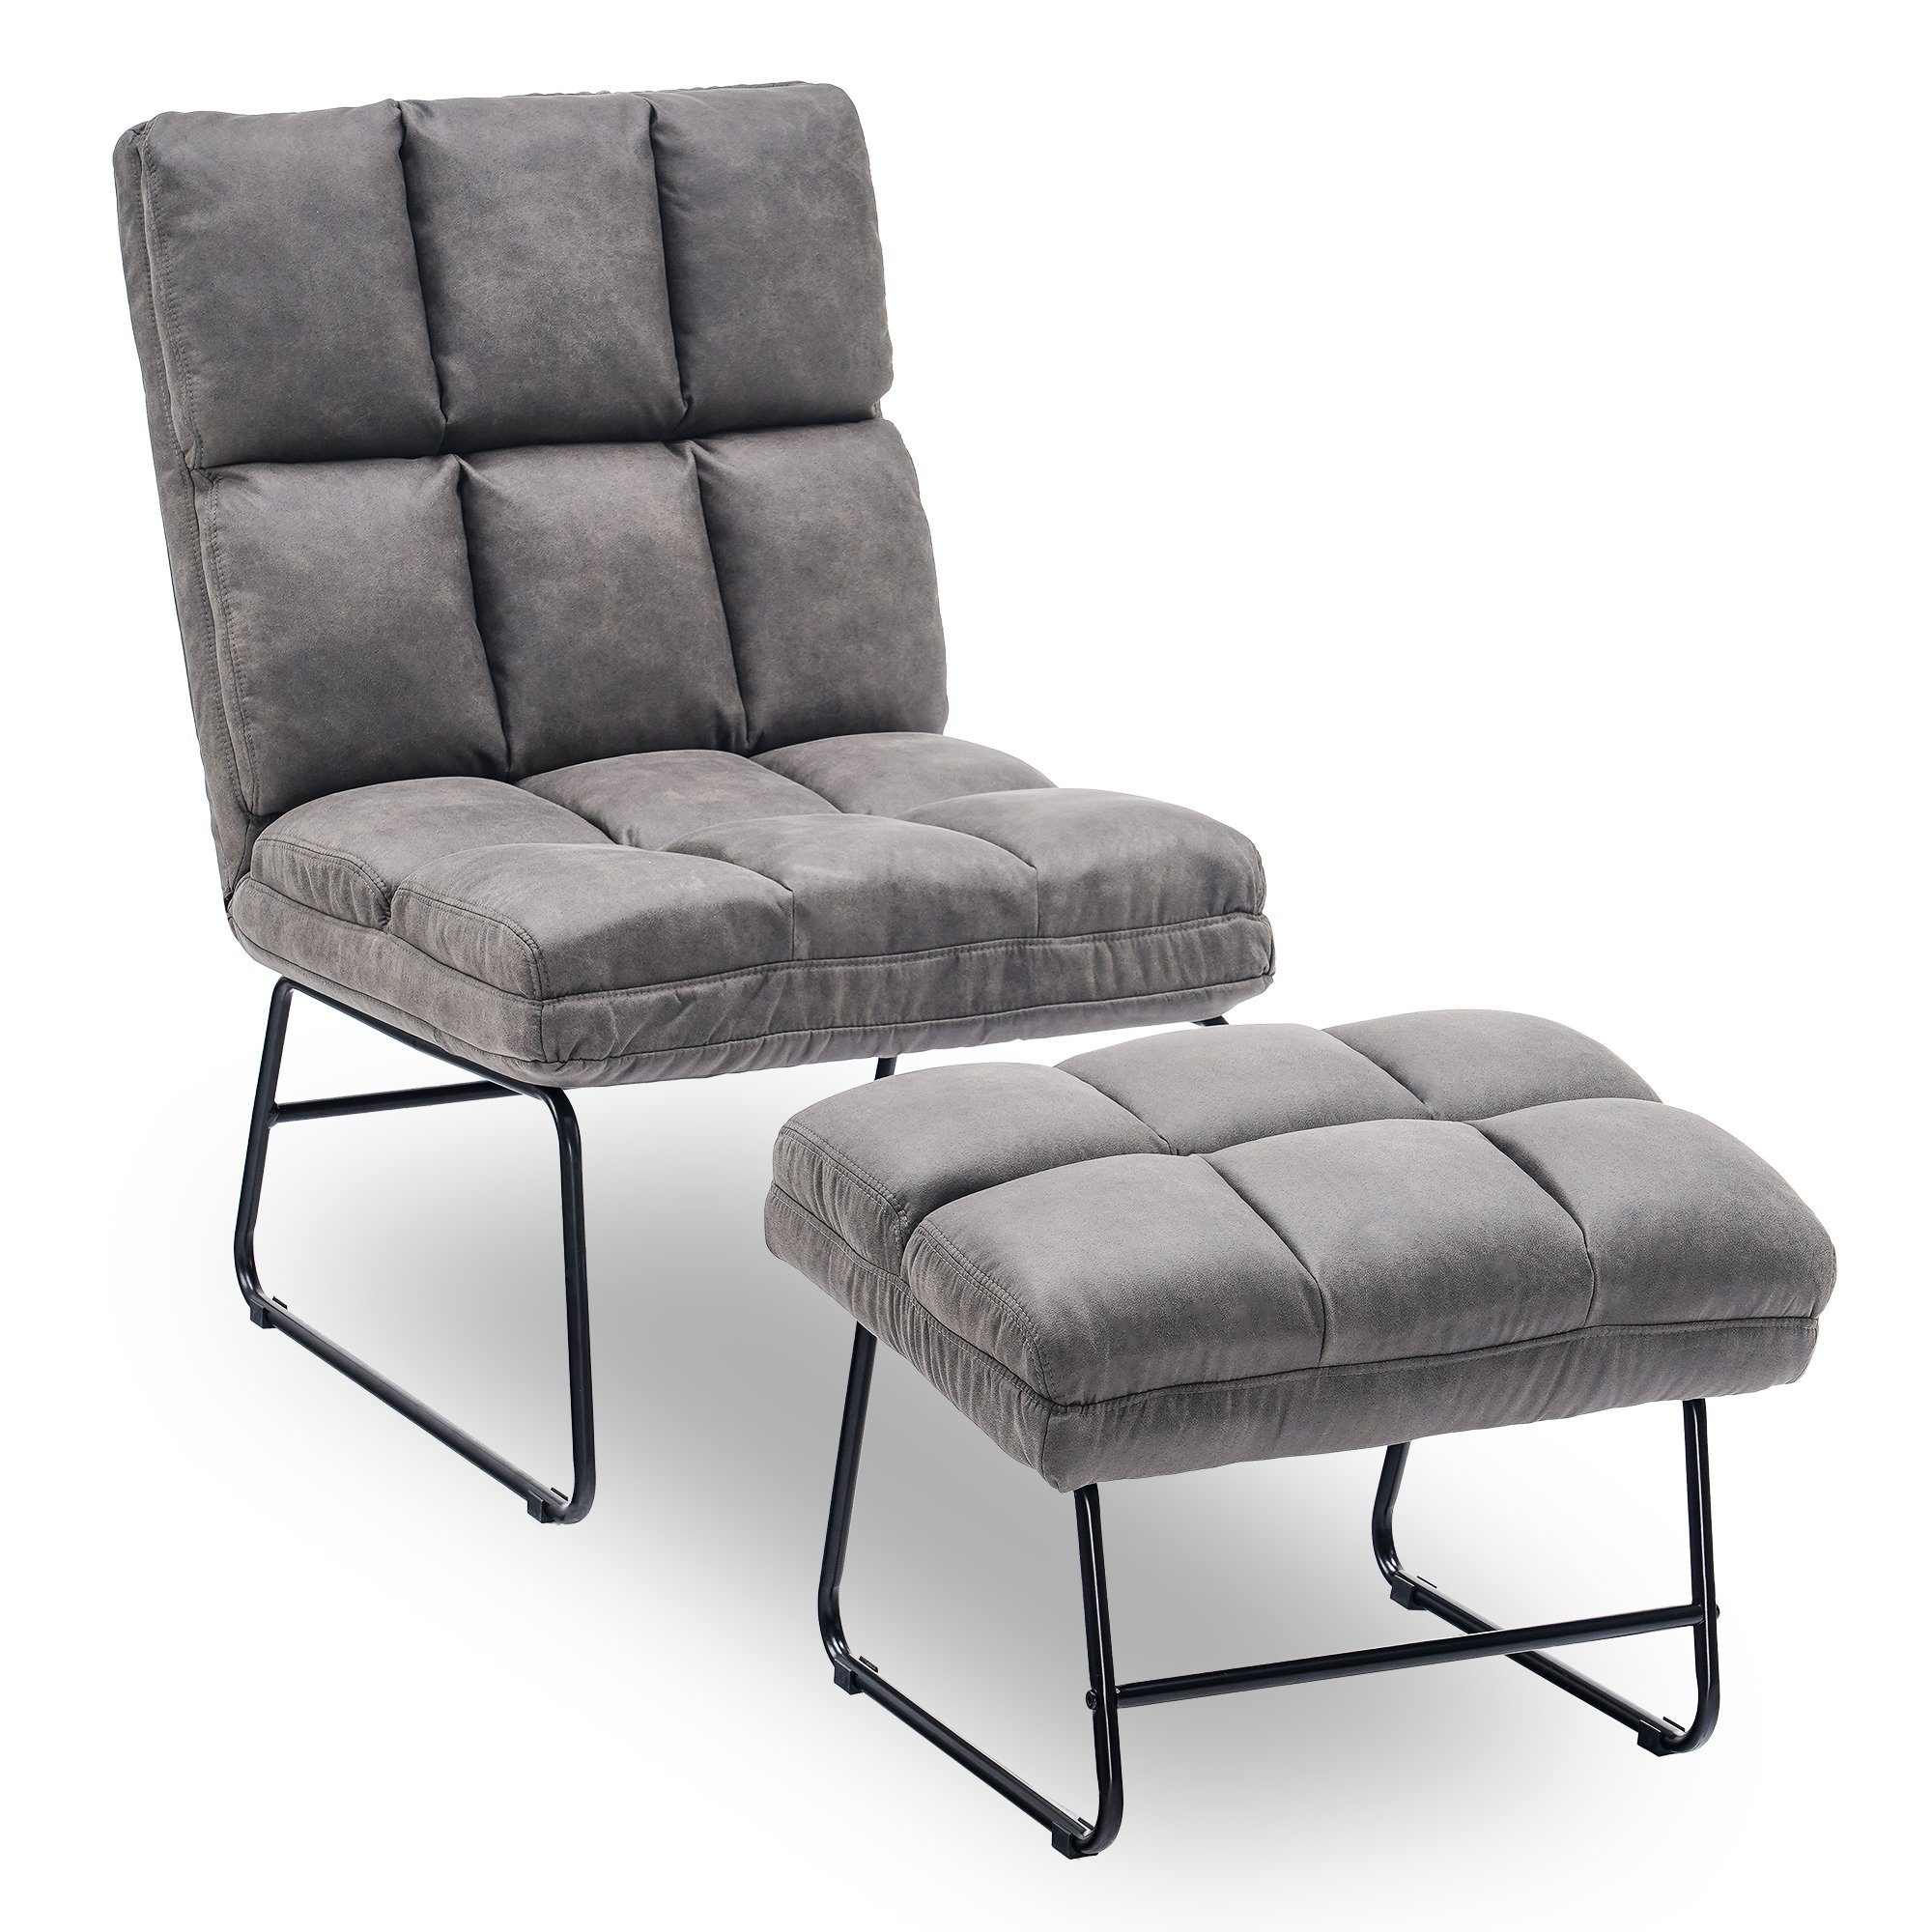 MCombo TV-Sessel MCombo Sessel mit Relaxsessel Loungesessel für moderner Fernsehsessel Stuhl / Hocker 0014 0016, Wohnzimmer